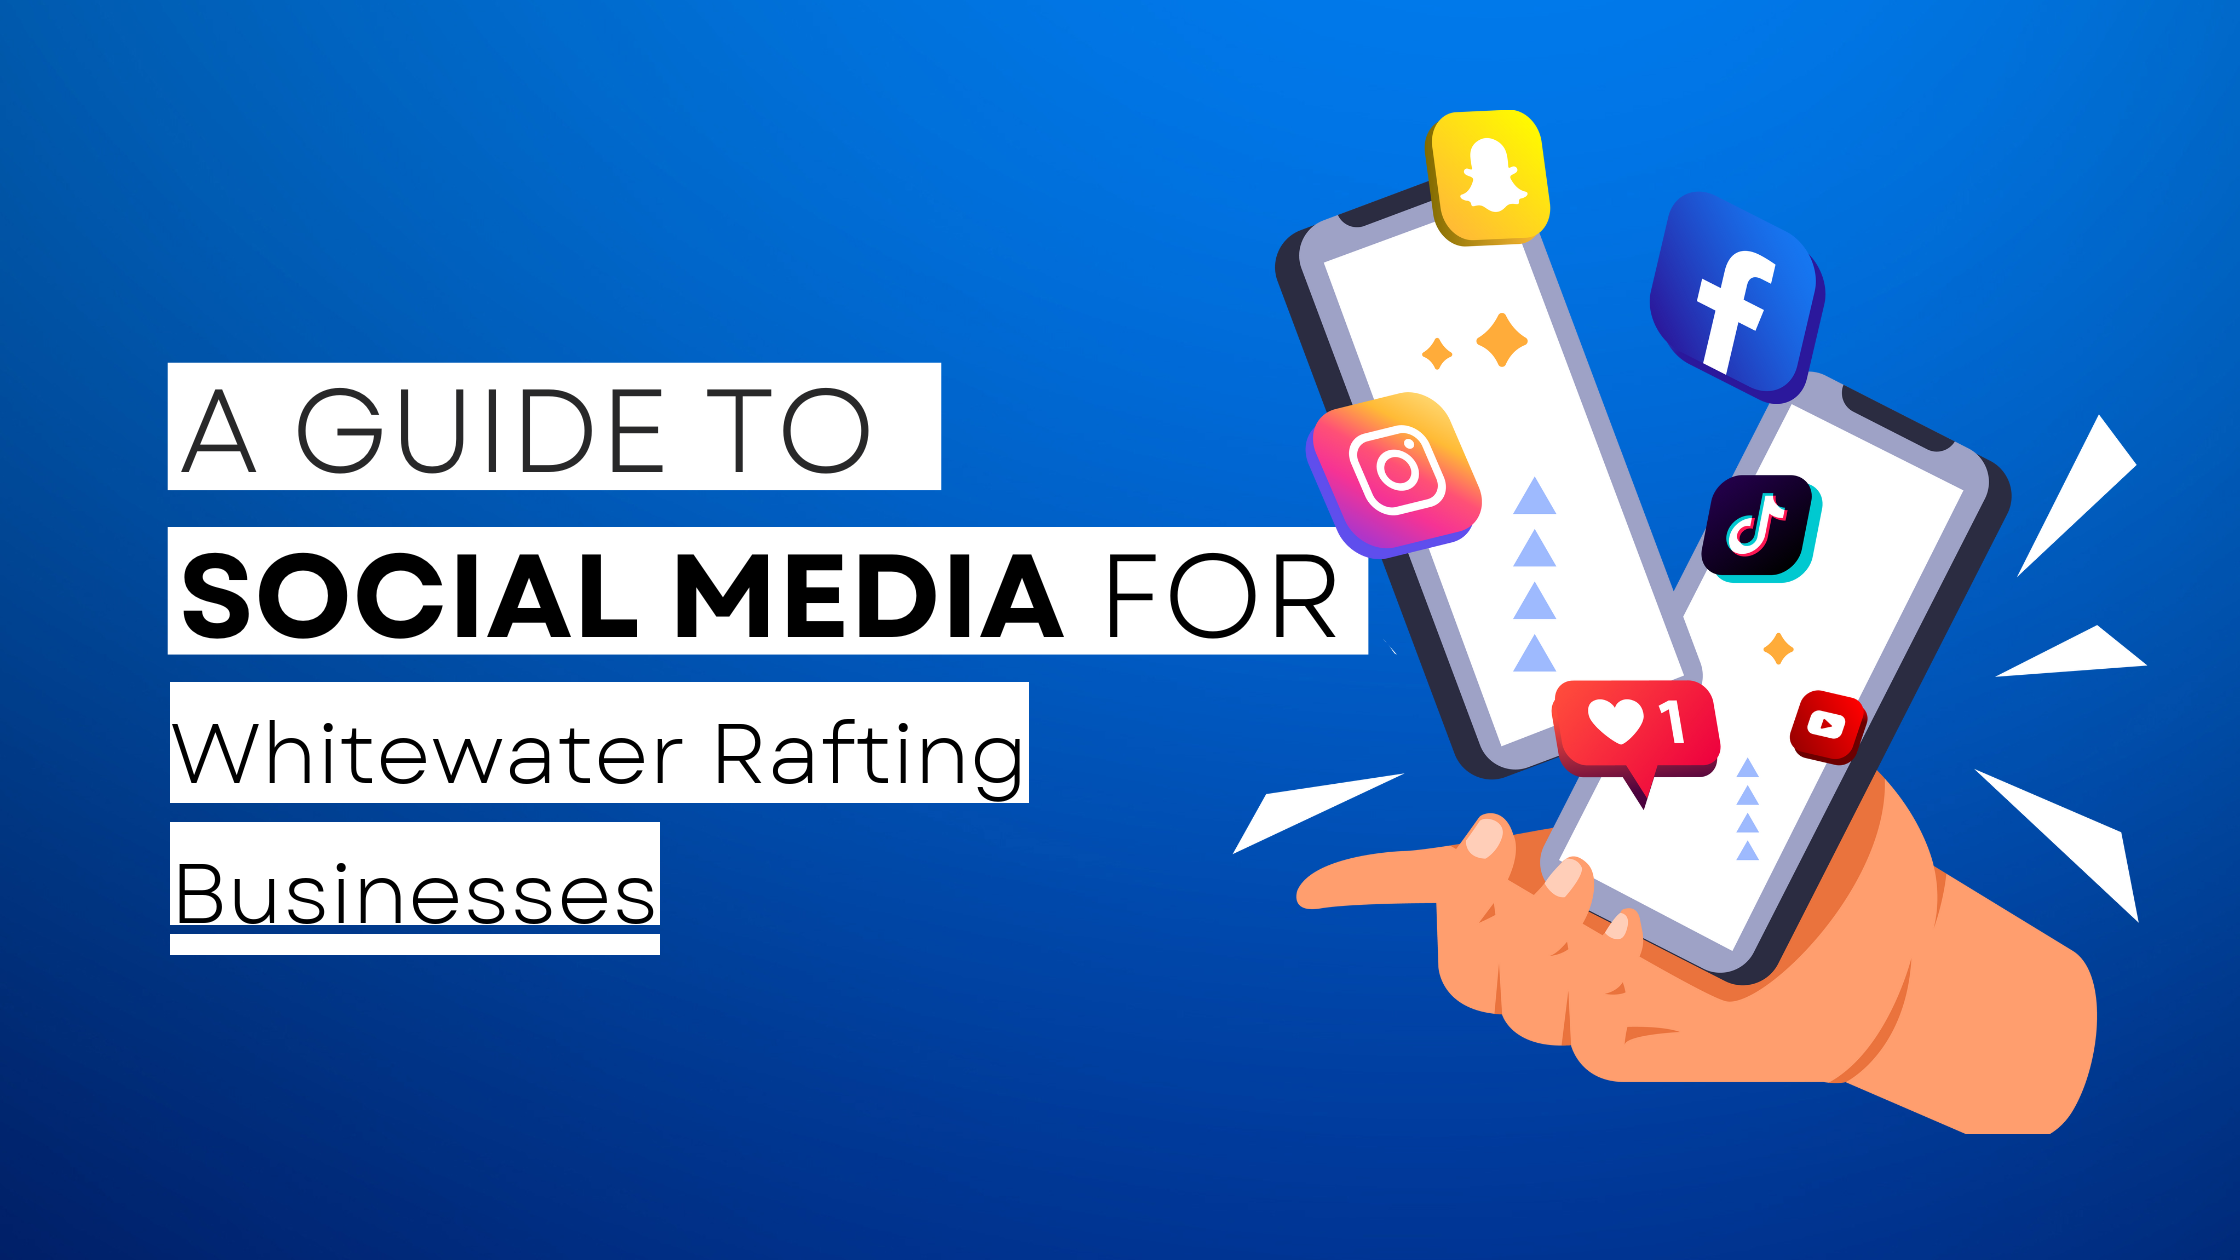 How to start Whitewater Rafting  on social media